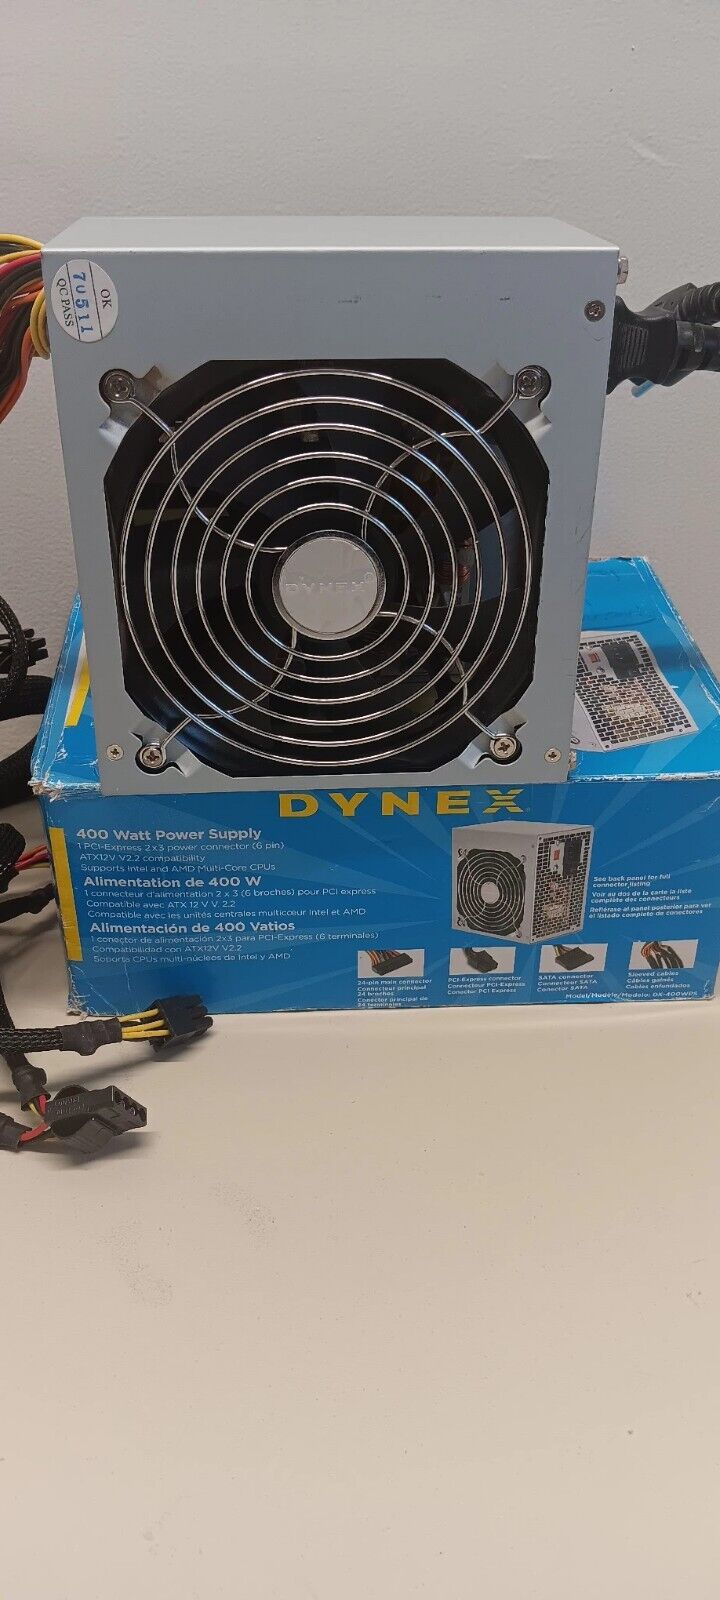 Dynex DX-400WPS 400-Watt Power Supply